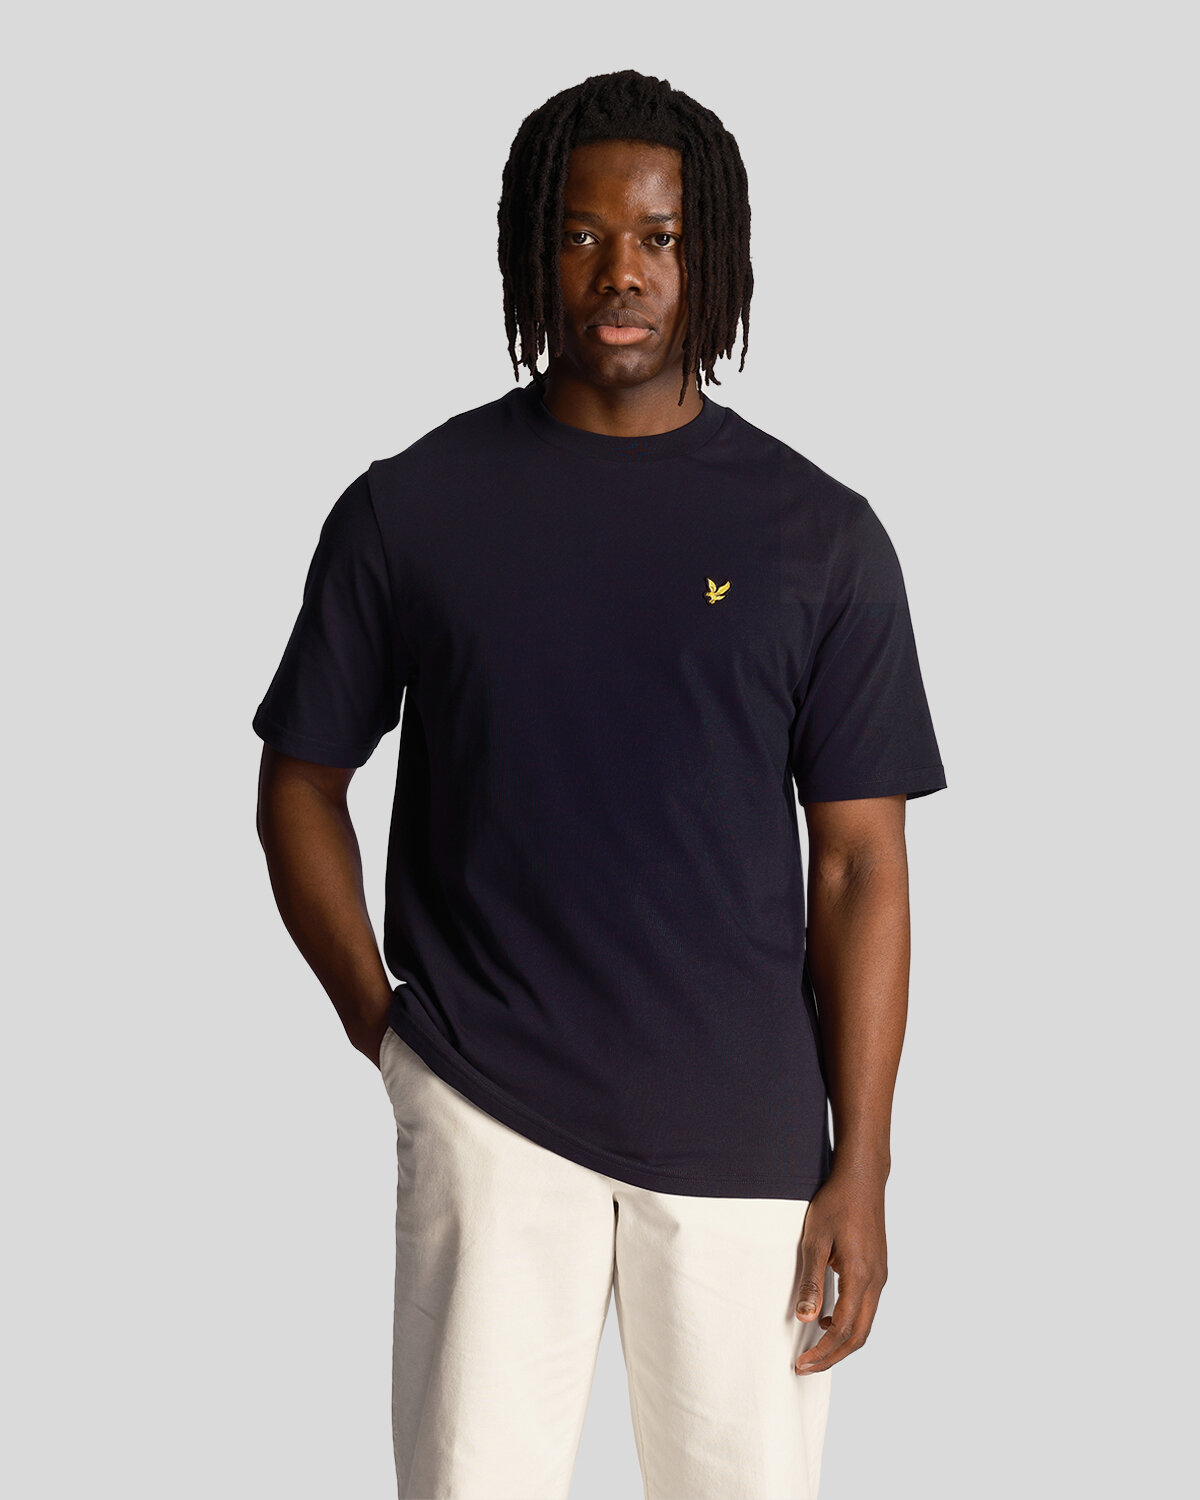 Футболка Lyle & Scott Oversized T-Shirt, размер L, черный, синий